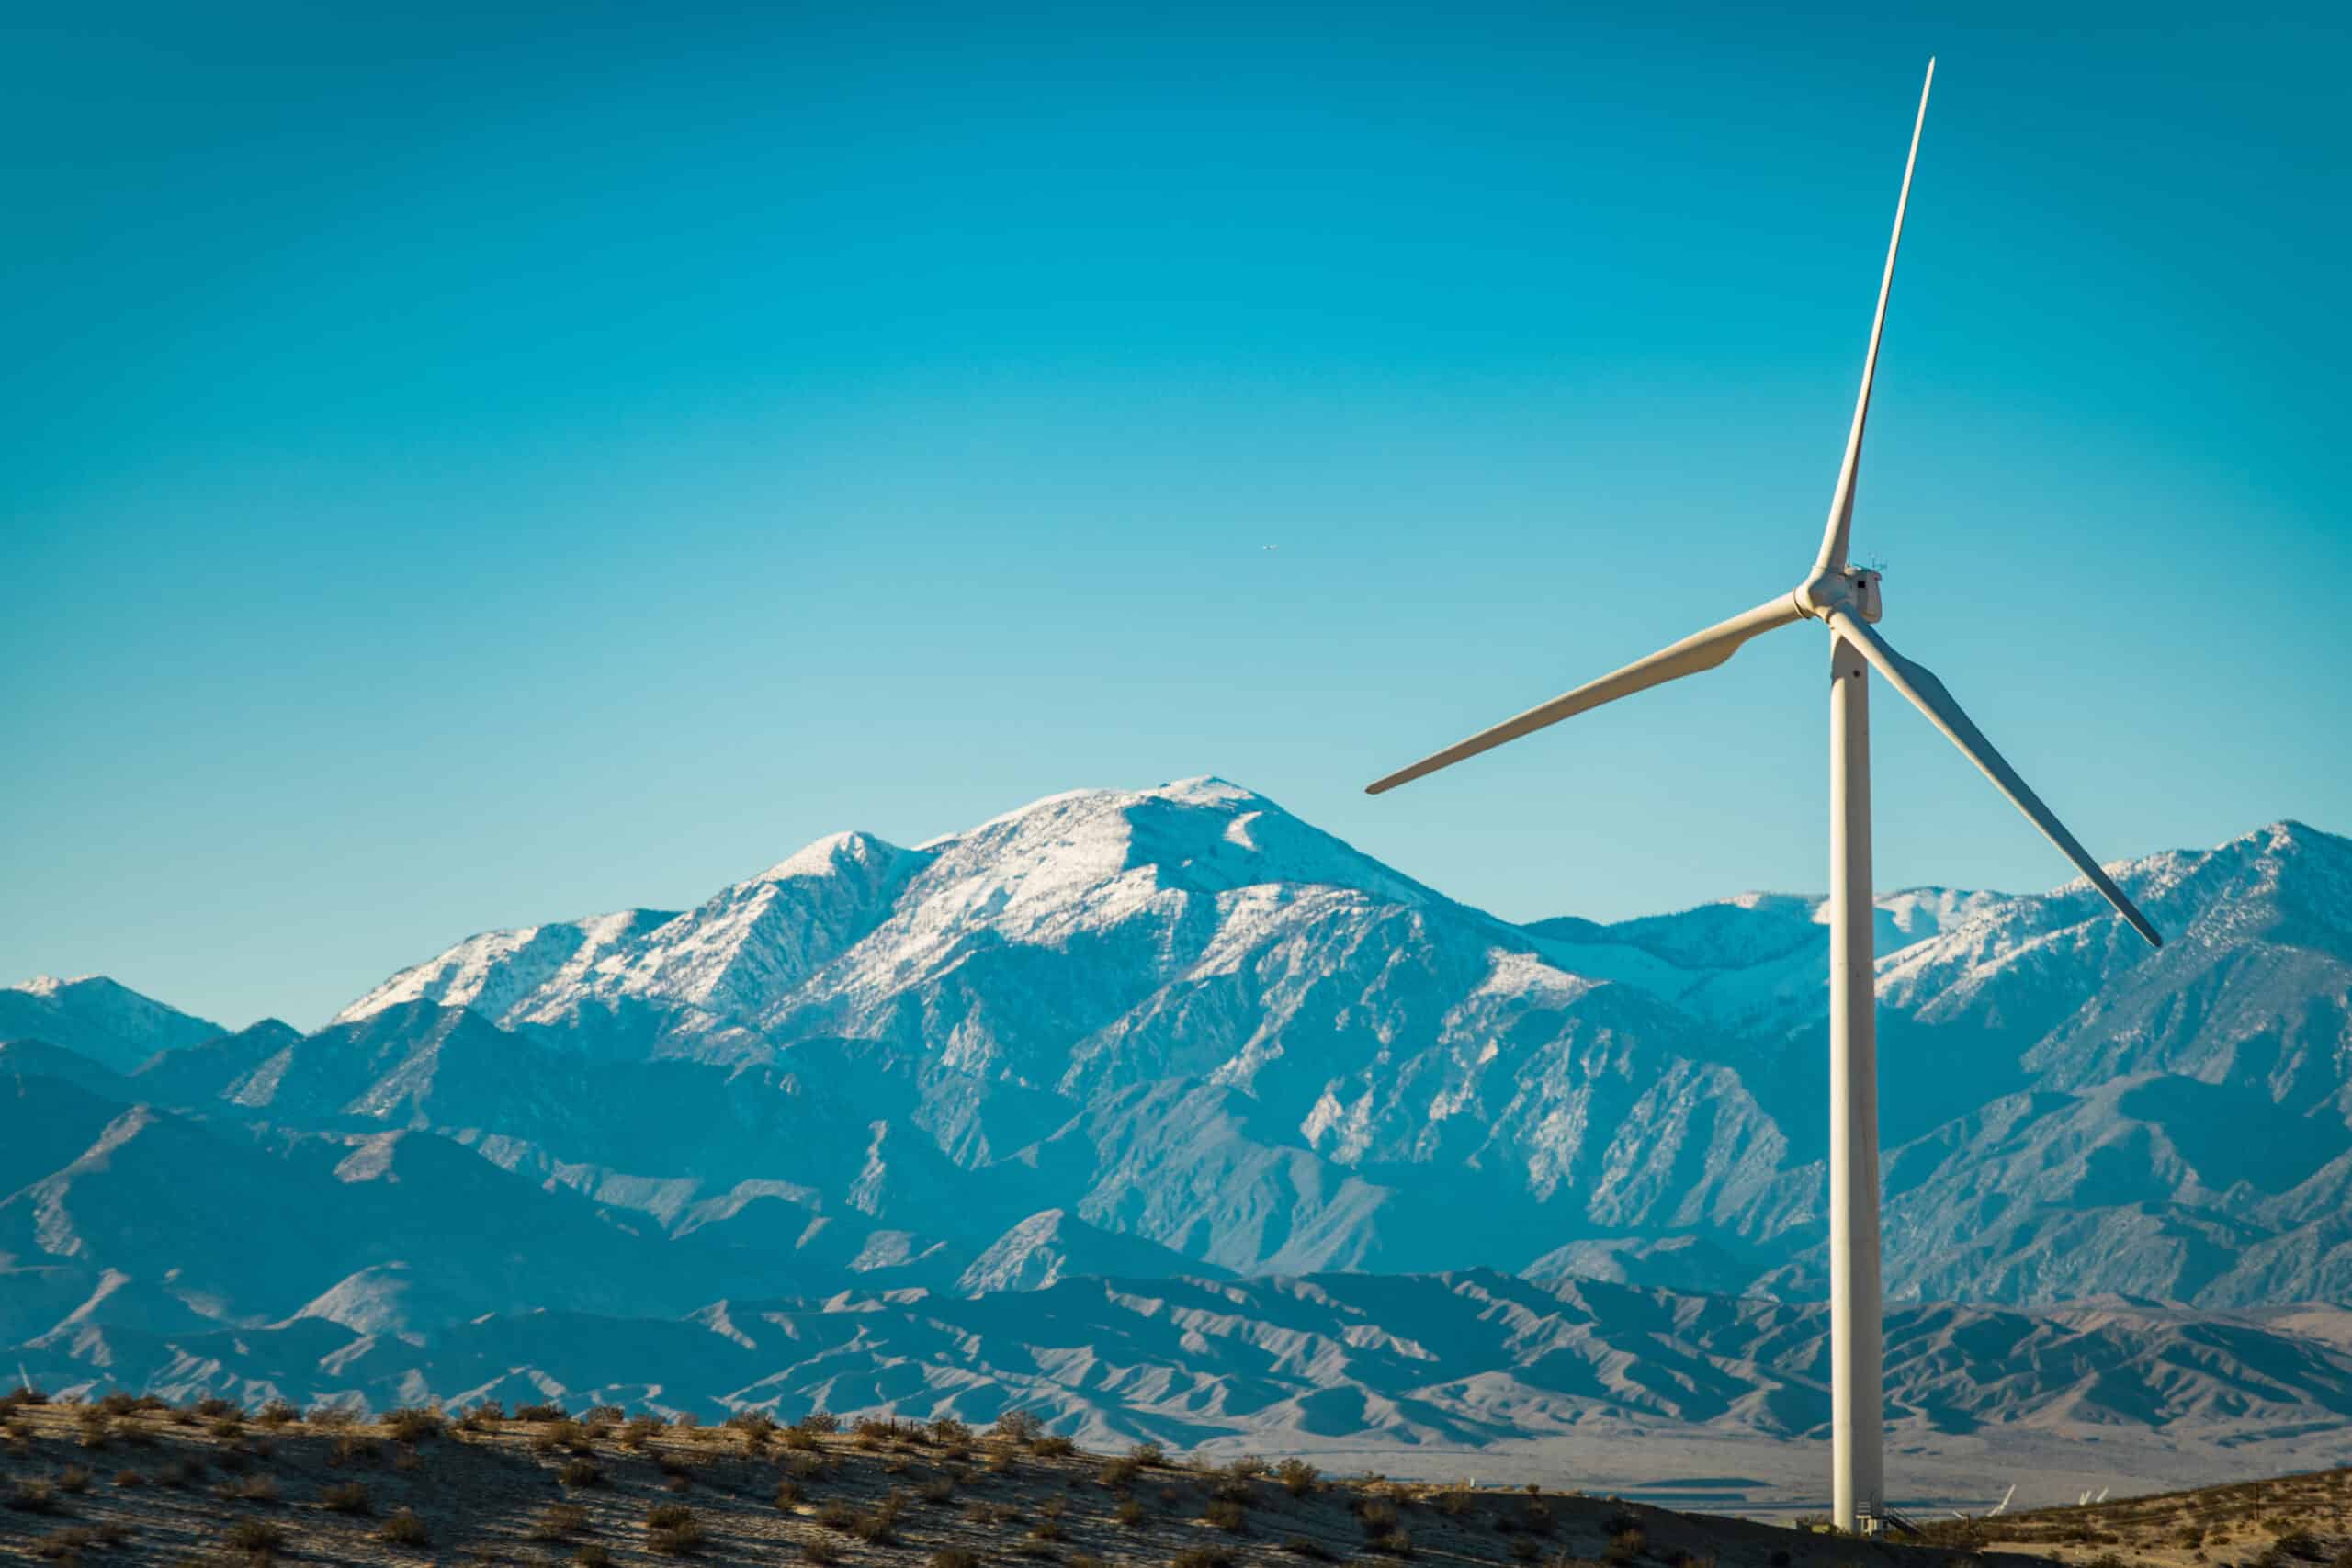 Wind Energy Plant Turbine and San Bernardino Mountains Covered by Snow, California USA. Green Energy Supply Theme.